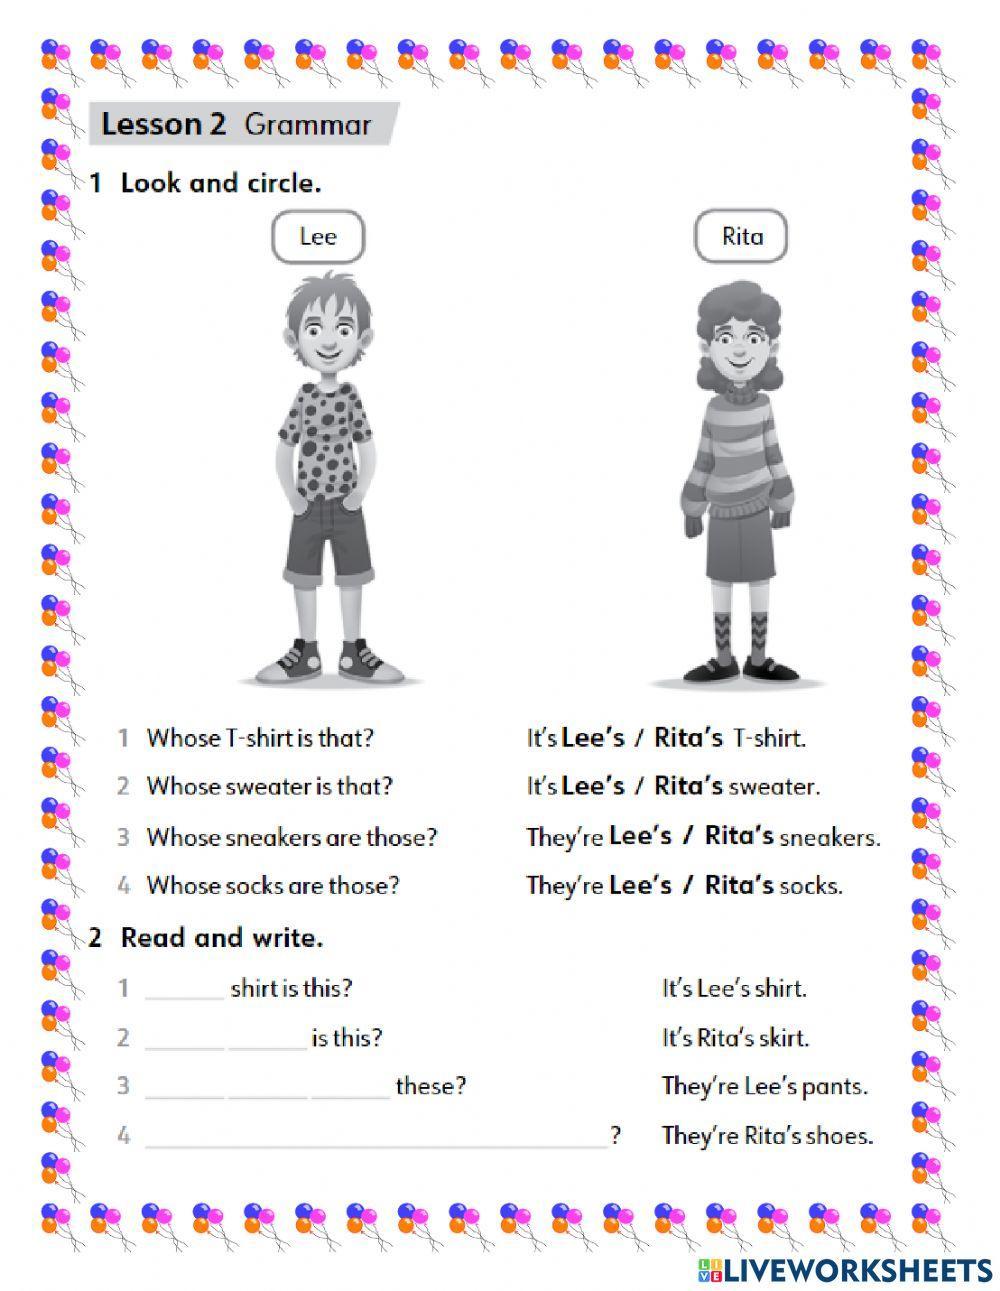 Share it 2 Unit 8 Lesson 2 Grammar